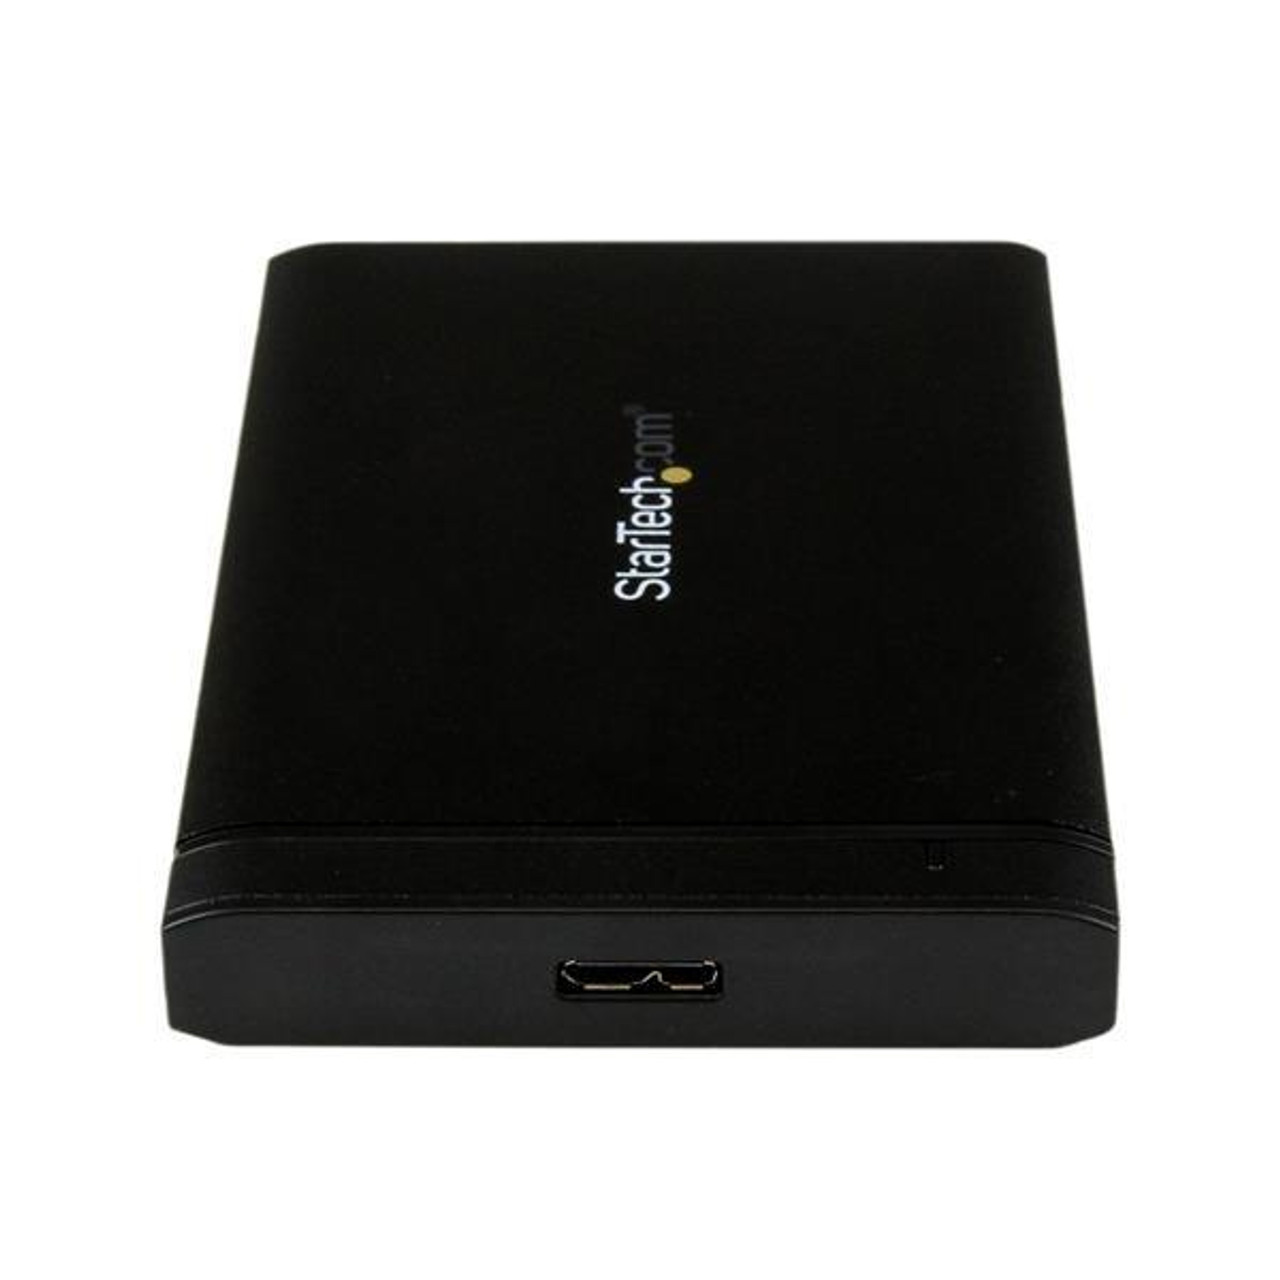 S2510U33RUSM StarTech 2.5-inch SATA USM Enclosure Bay with External USB 3.0 Adapter